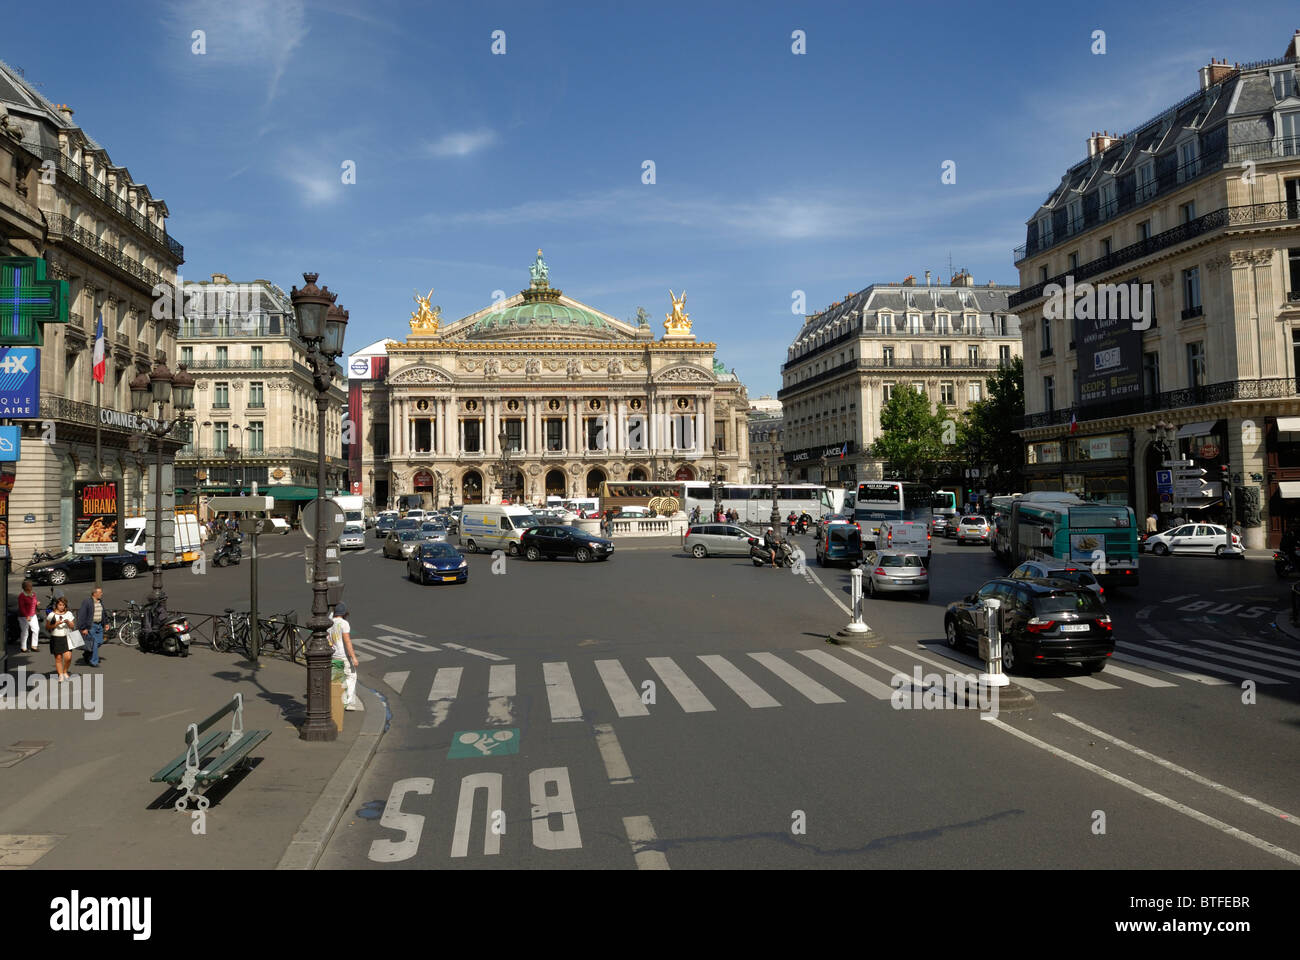 Gelijkenis Groet Pech Place De l' Opera, Palais Garnier as seen from Avenue De L' Opera, Paris  France Stock Photo - Alamy